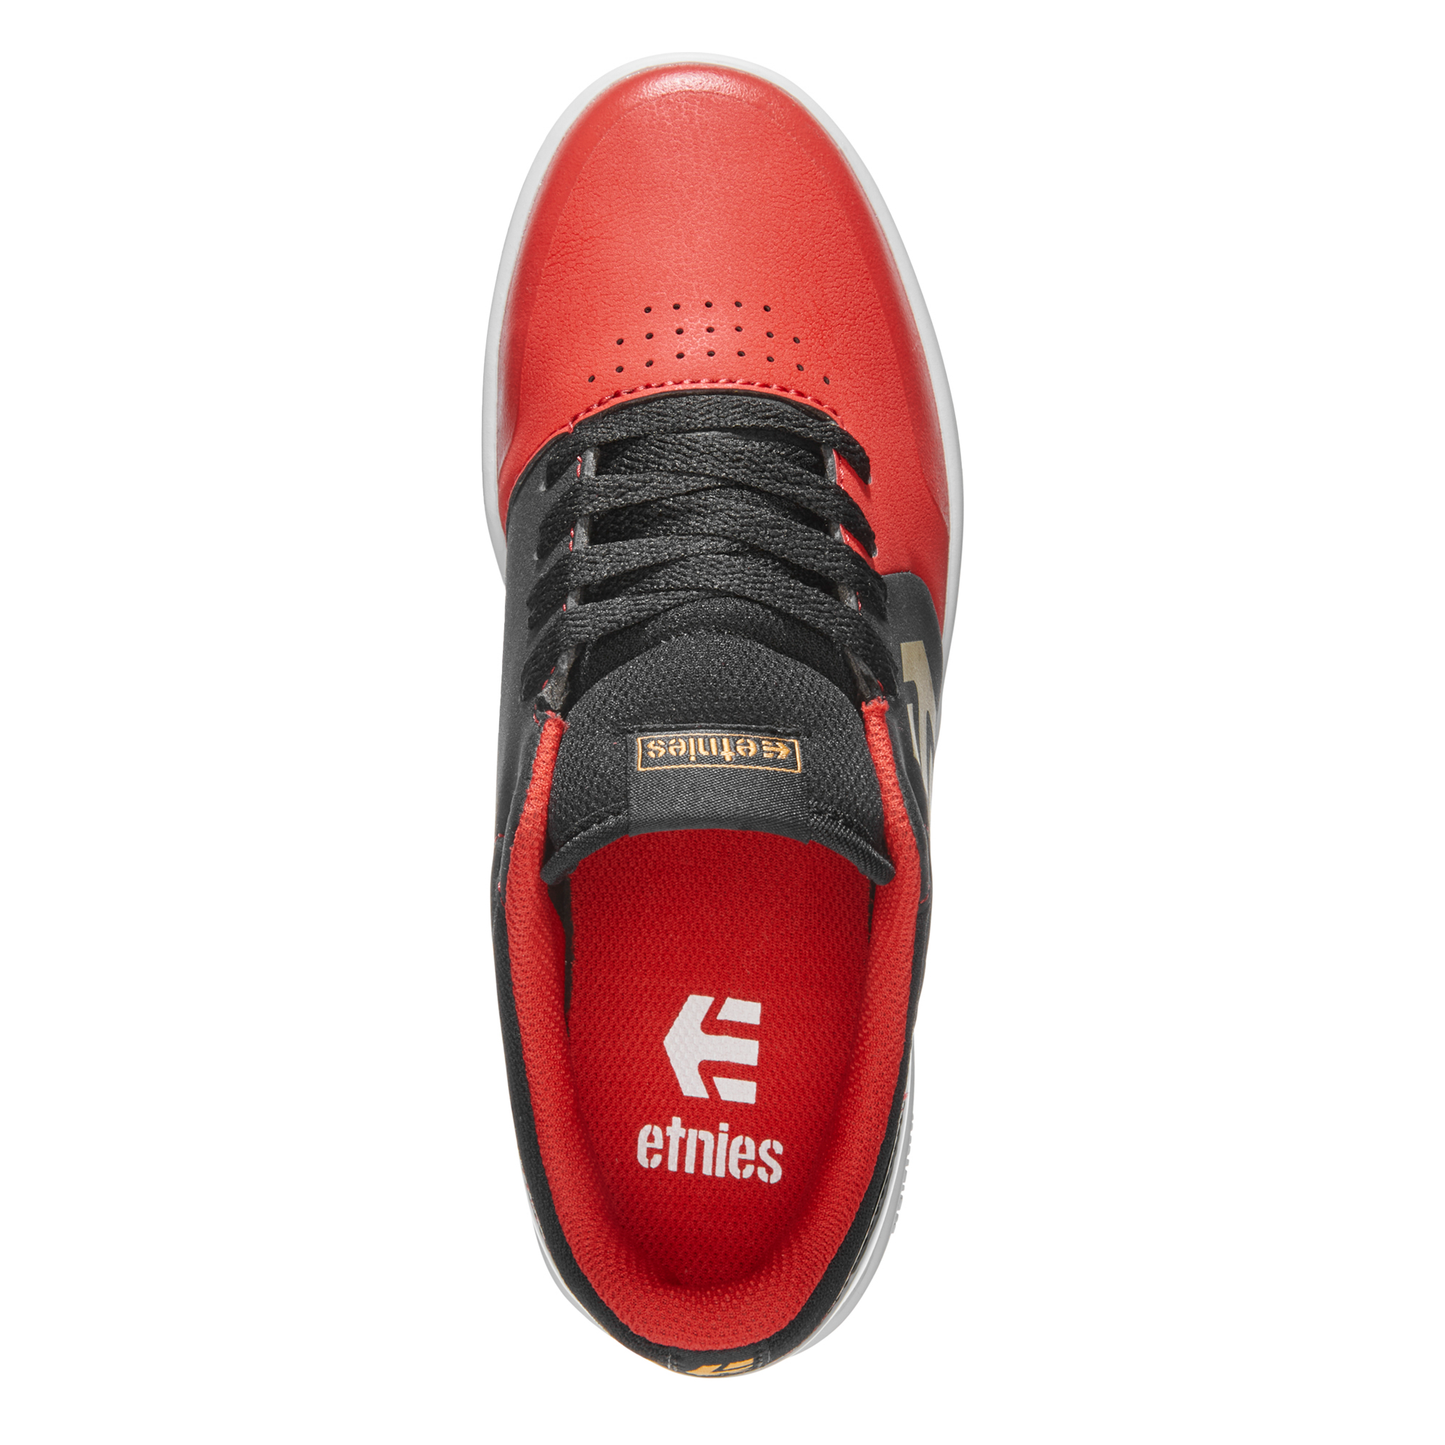 Etnies Marana Kids Flat Shoes - US 3C - Black - Glam - Image 3